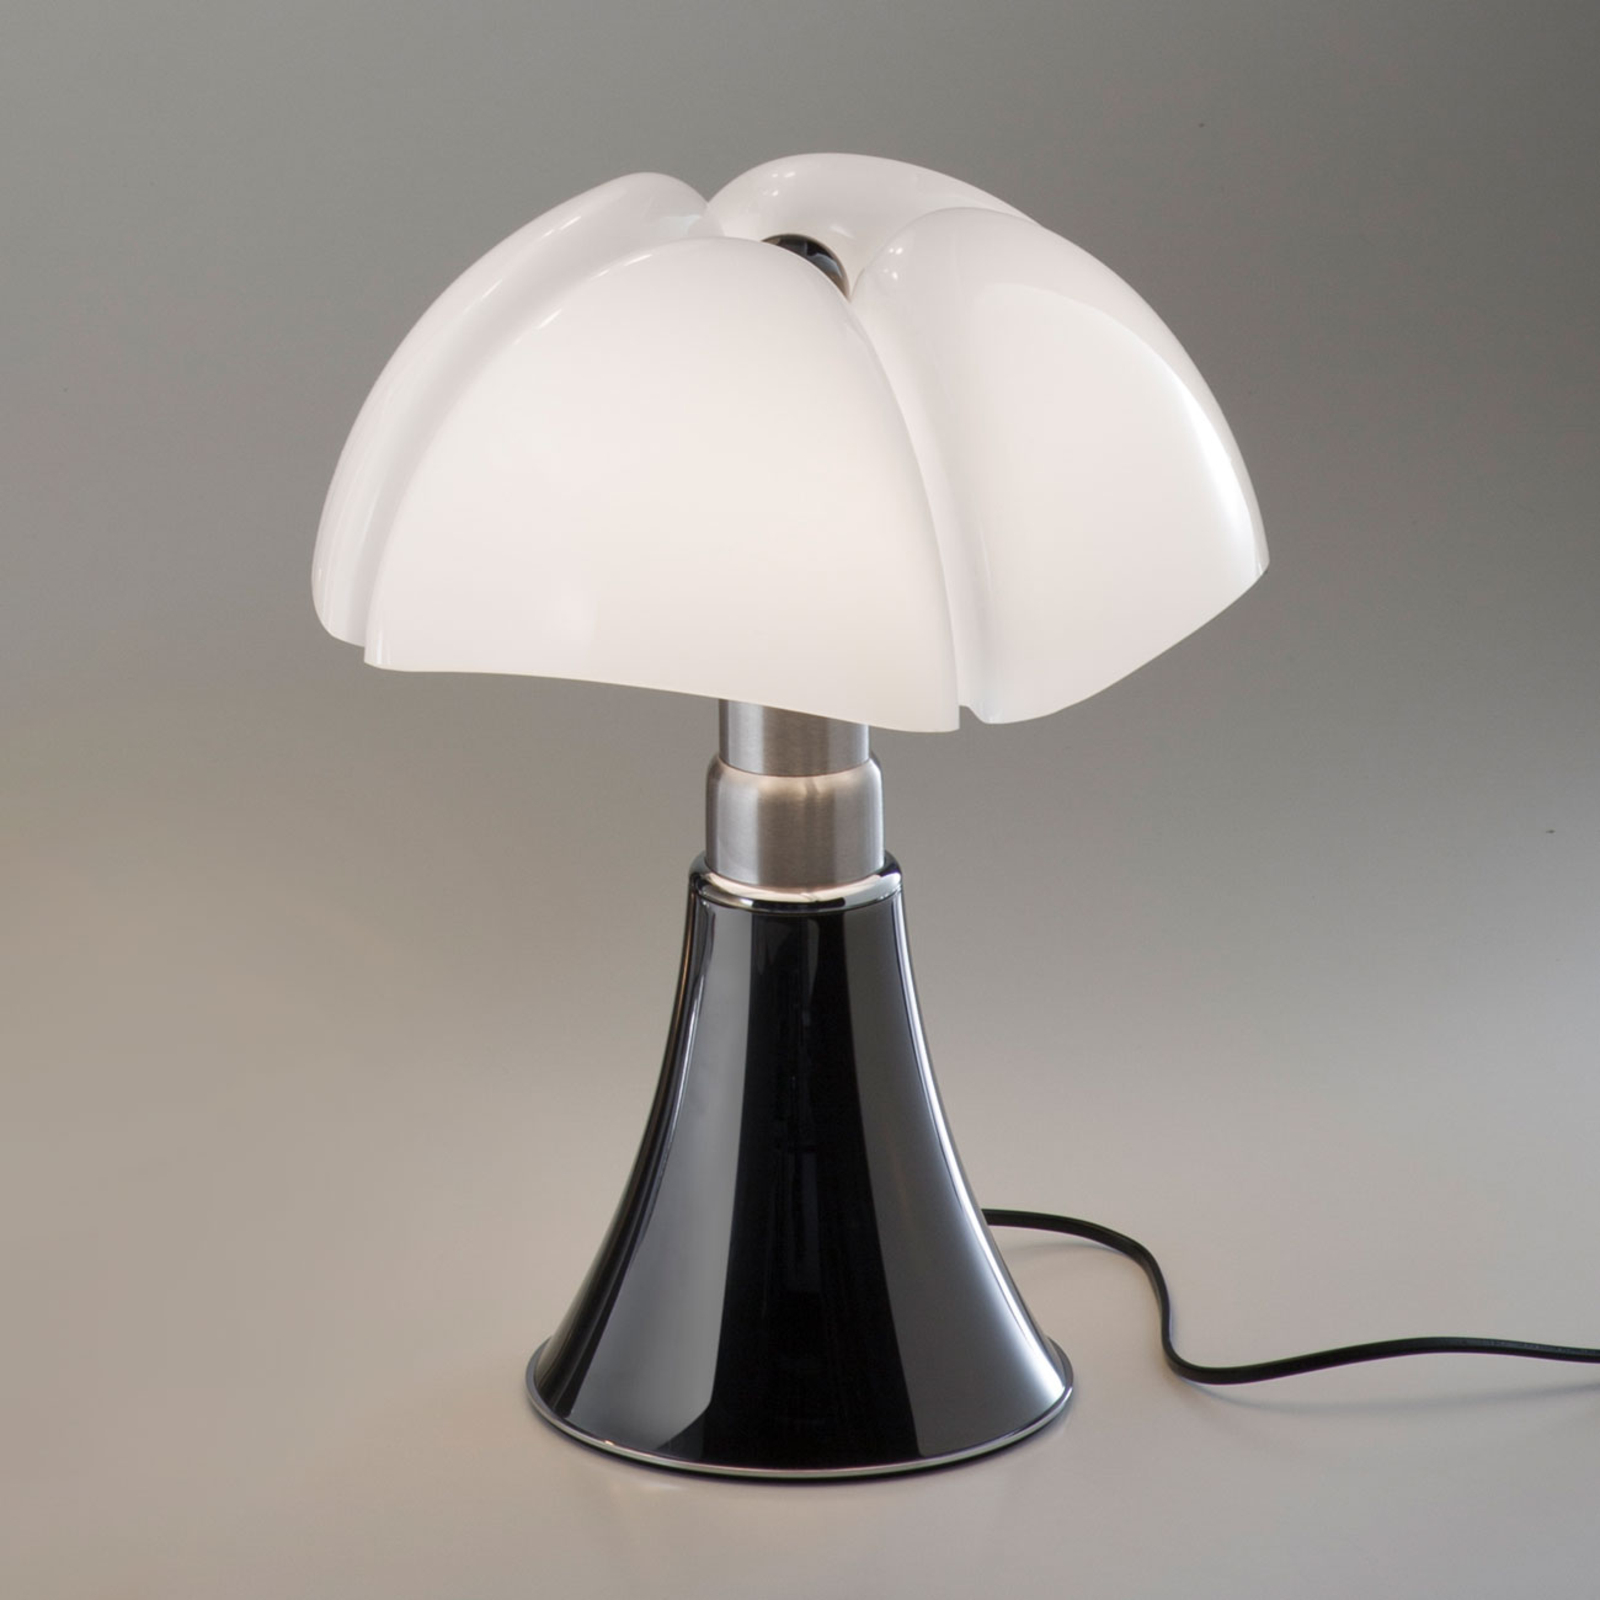 Martinelli Luce Minipipistrello table lamp titanium